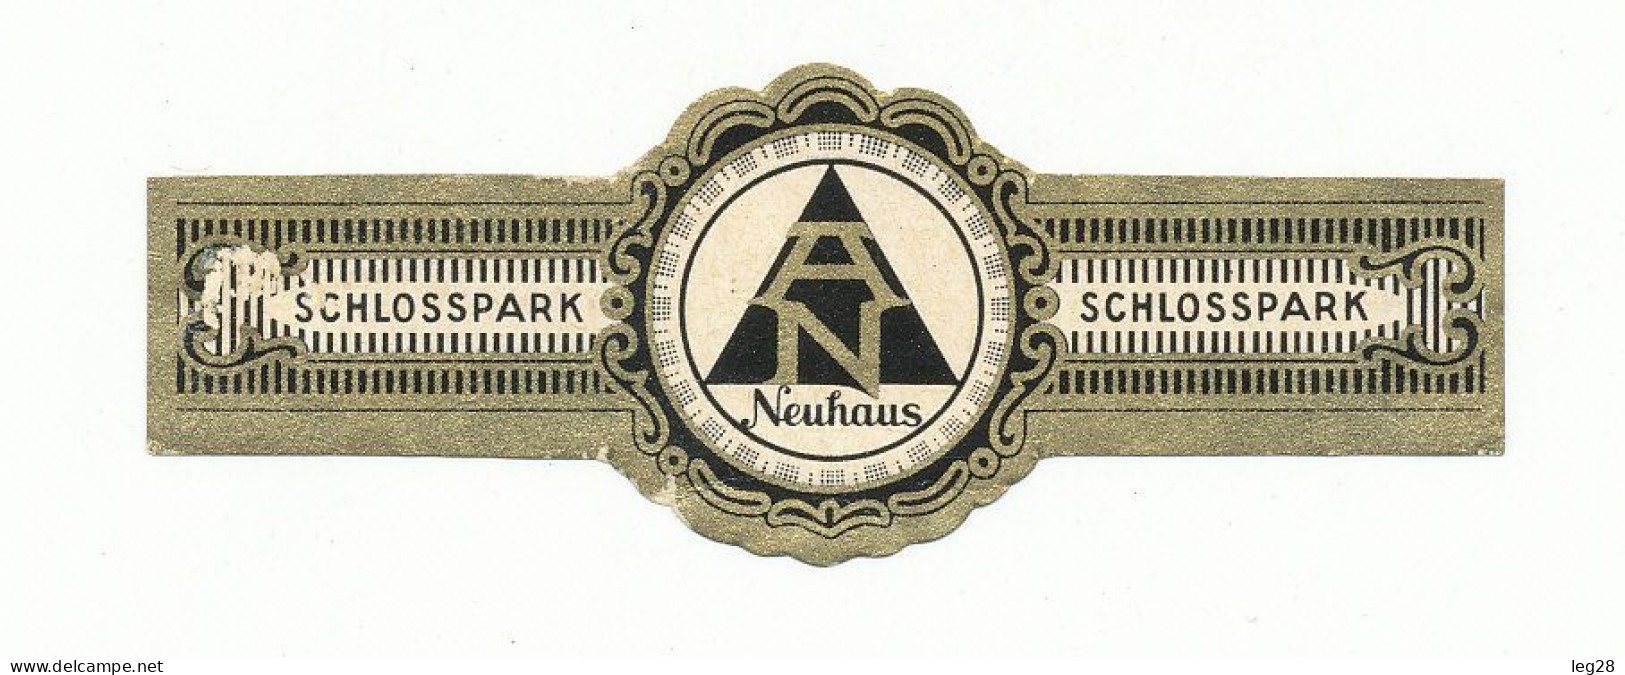 NEUHAUS - Bauchbinden (Zigarrenringe)